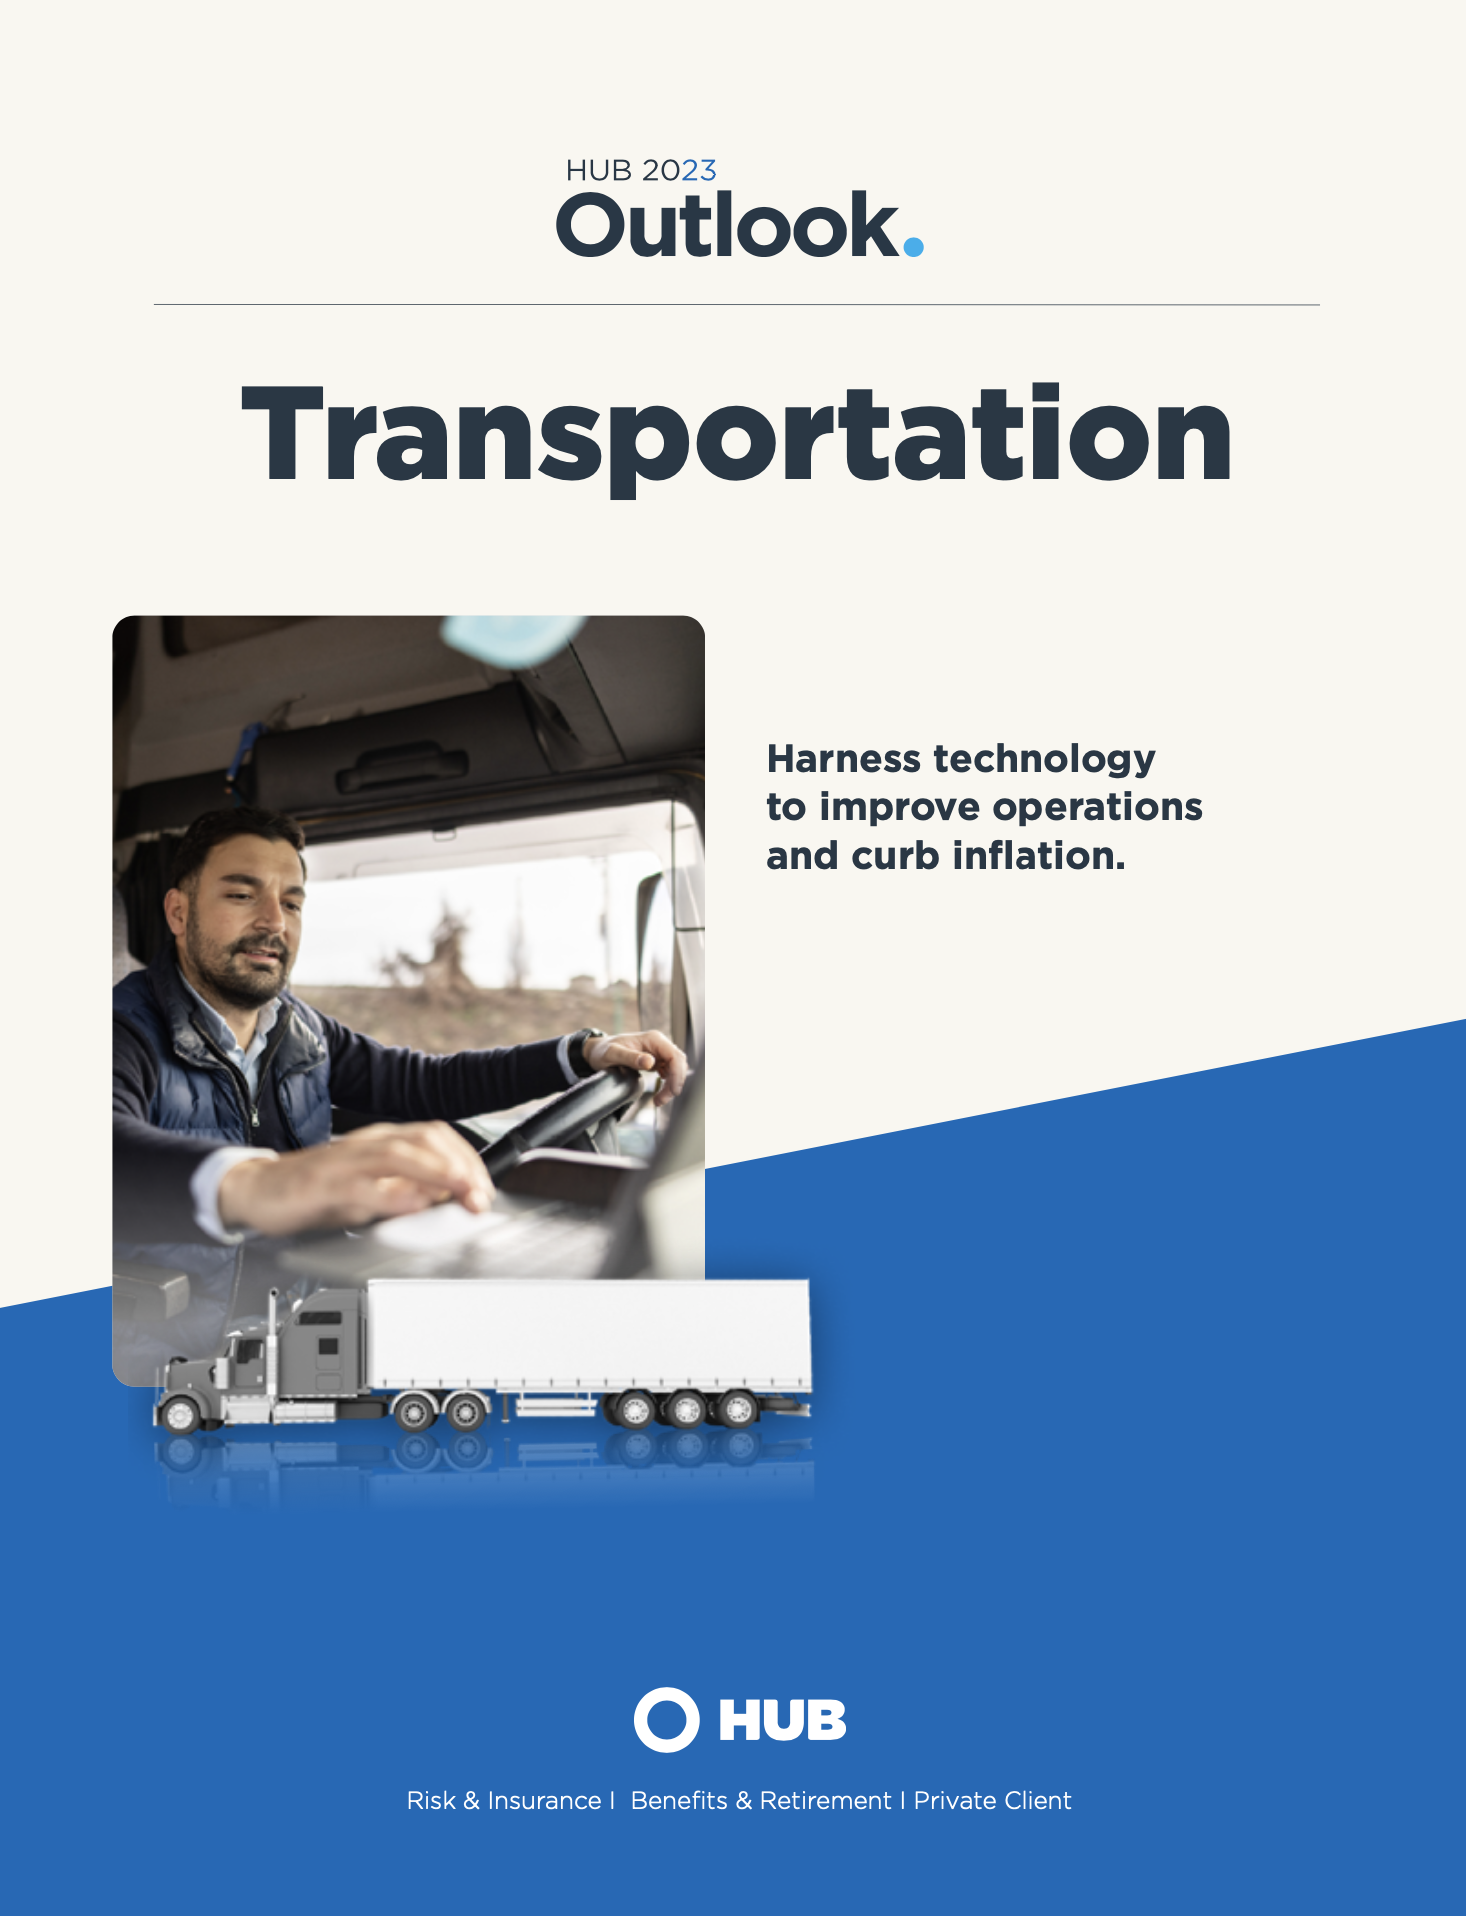 HUB 2023 Outlook: Transportation